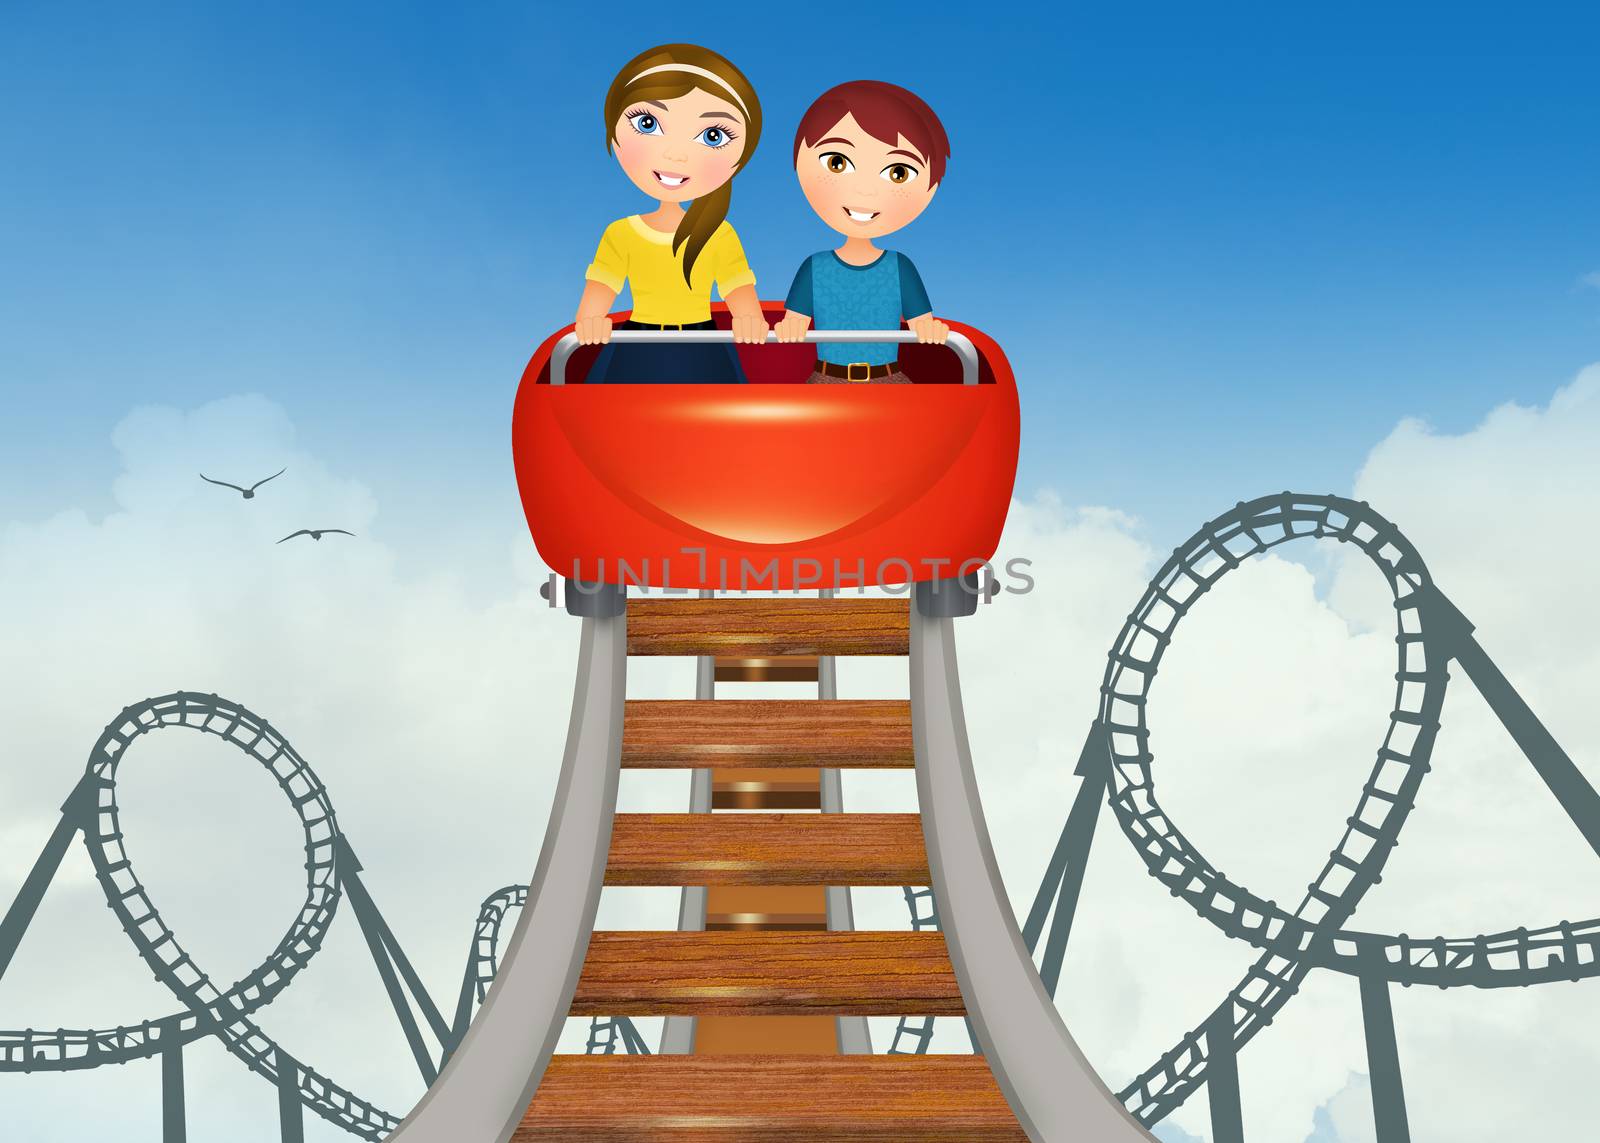 illustration of children on roller coaster